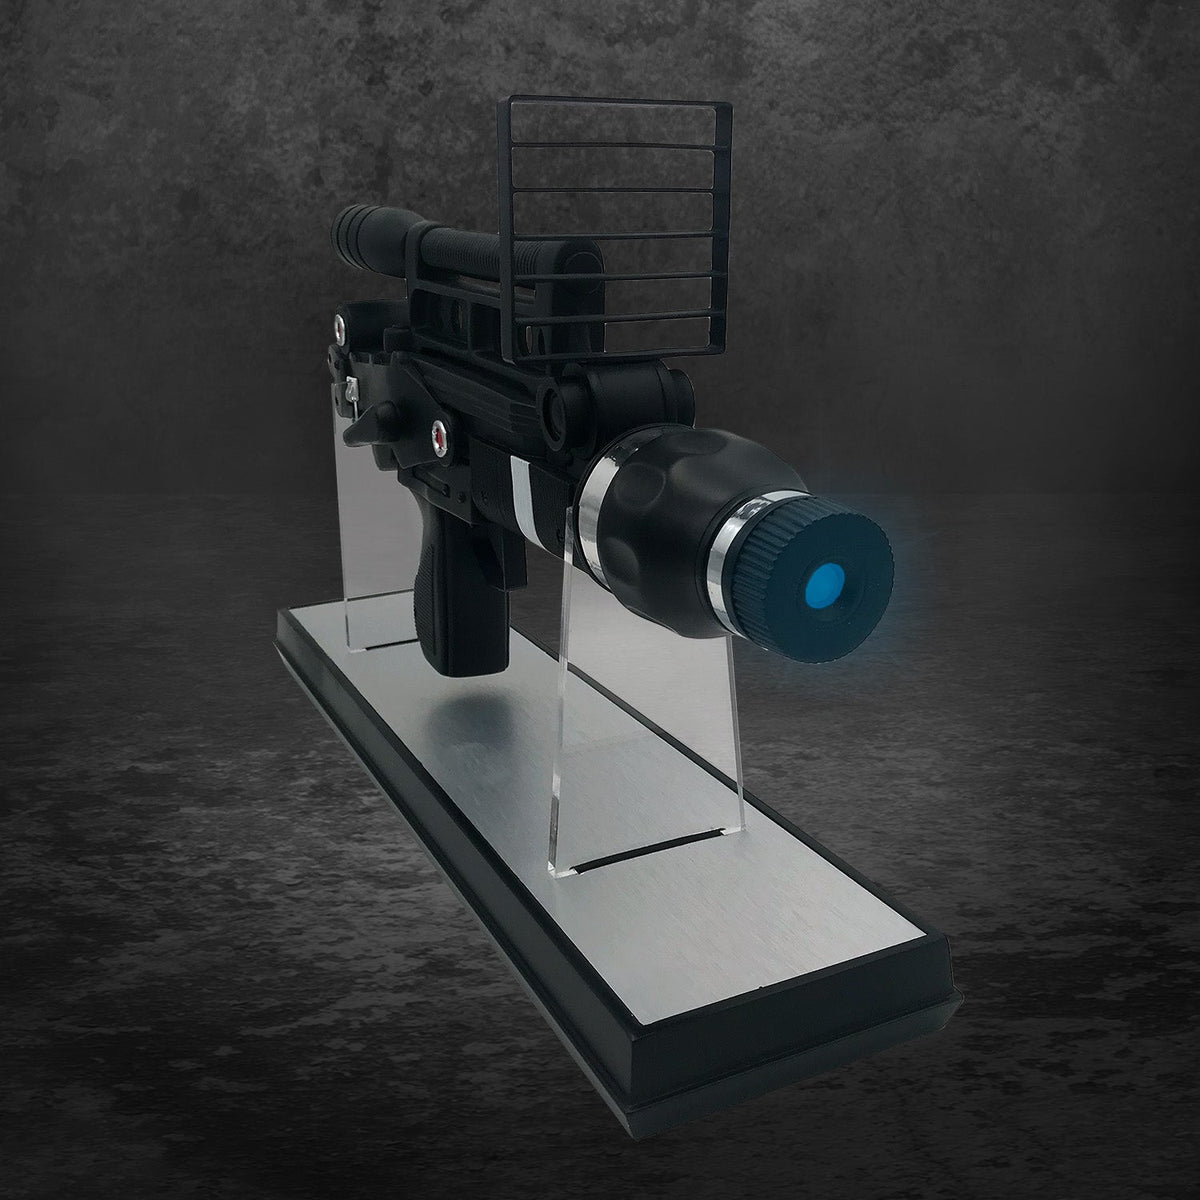 James Bond Moonraker Laser Gun Prop Replica - Numbered Black Edition